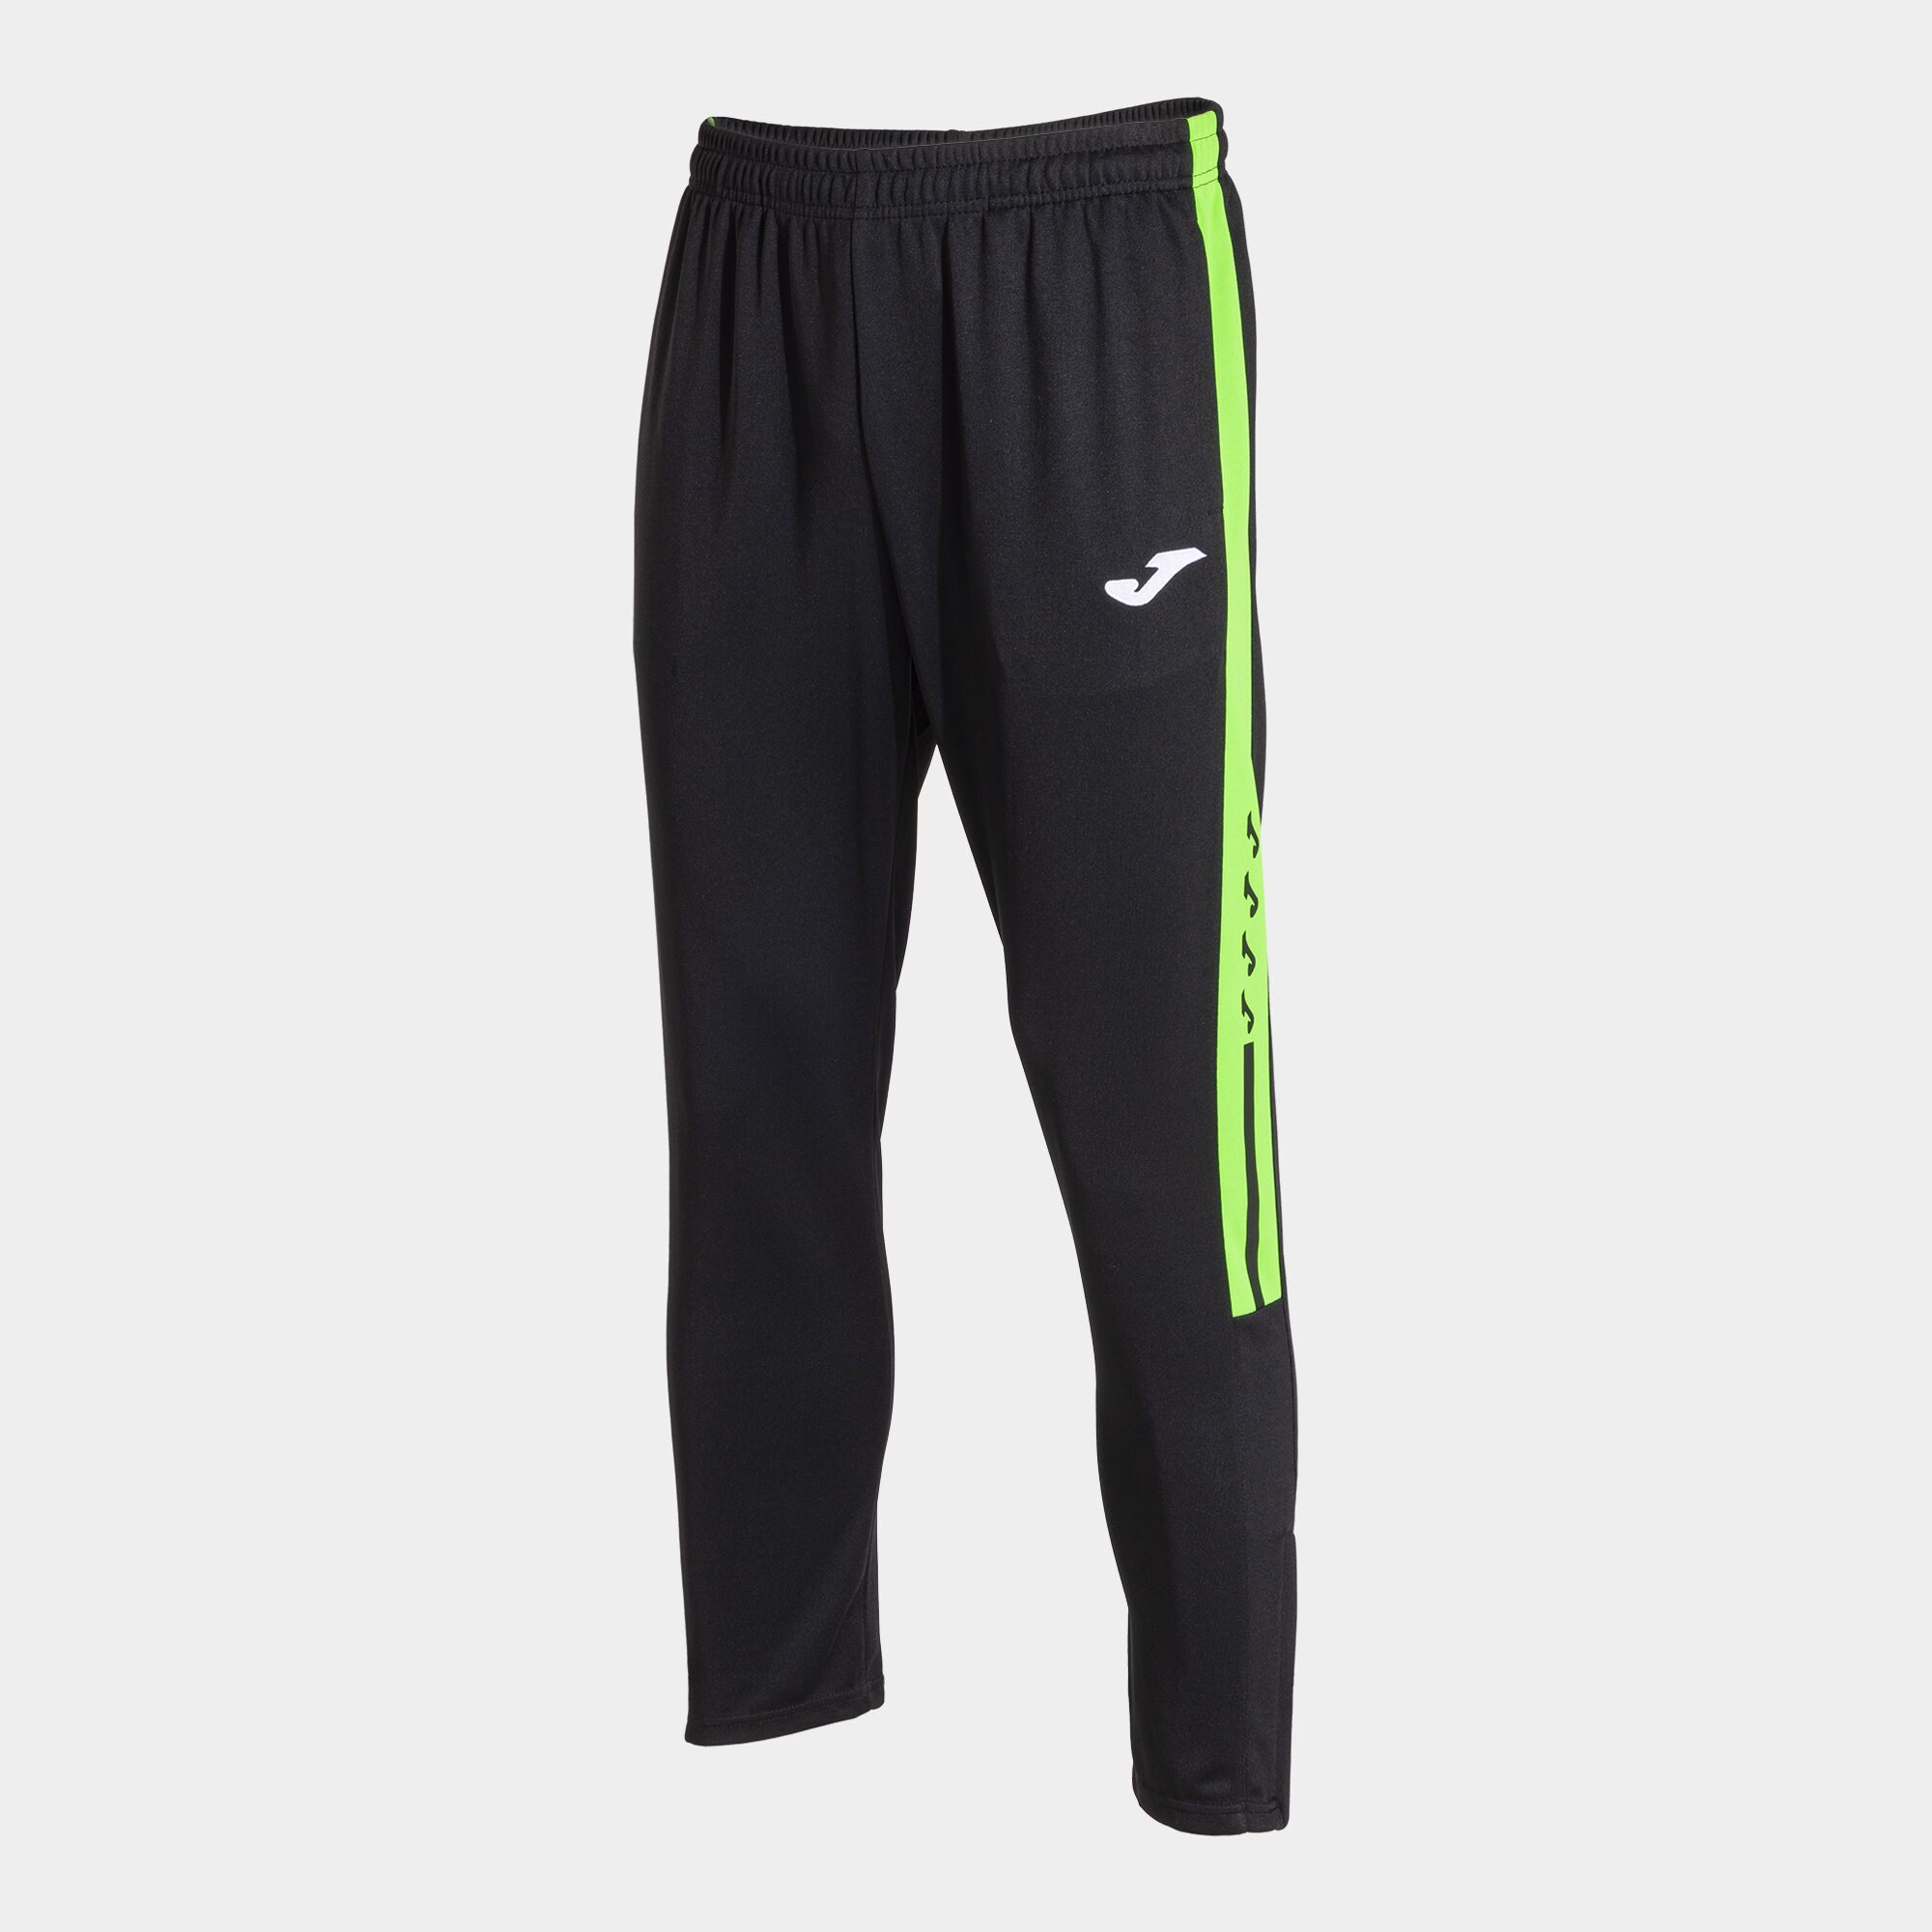 Longs pants man Olimpiada black fluorescent green